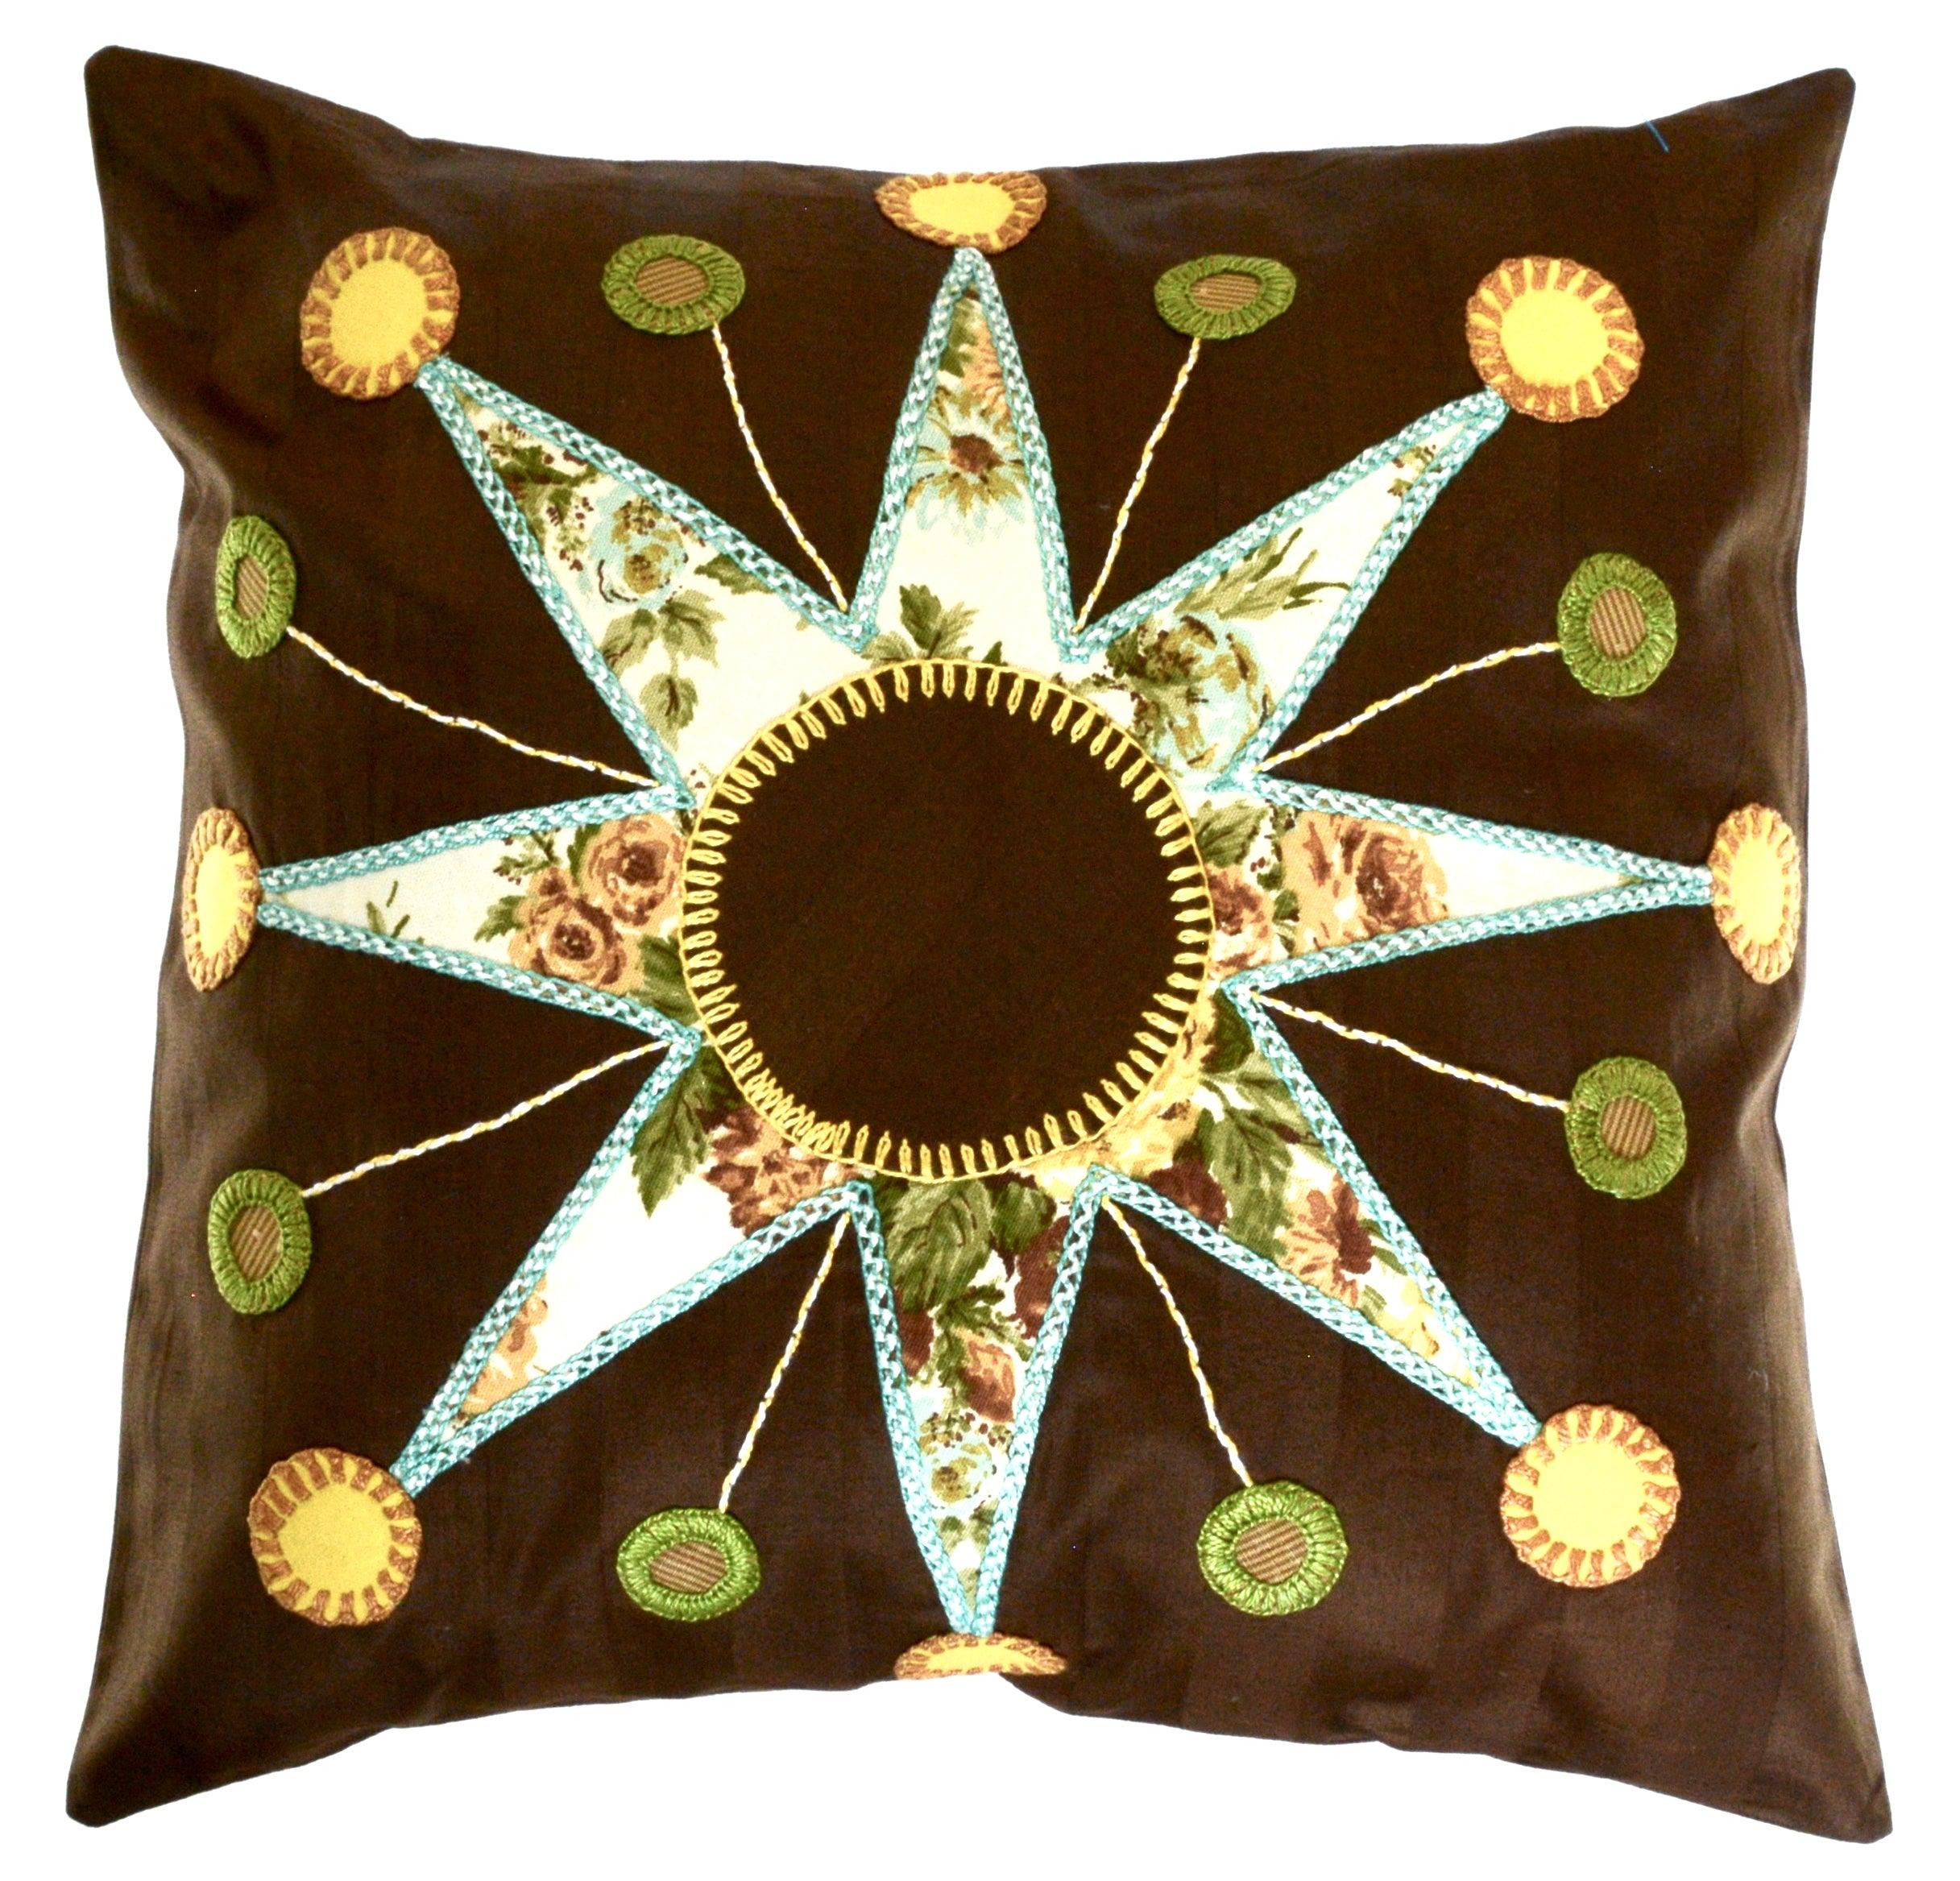 Sol Azul Design Embroidered Pillow on brown Honduras Threads